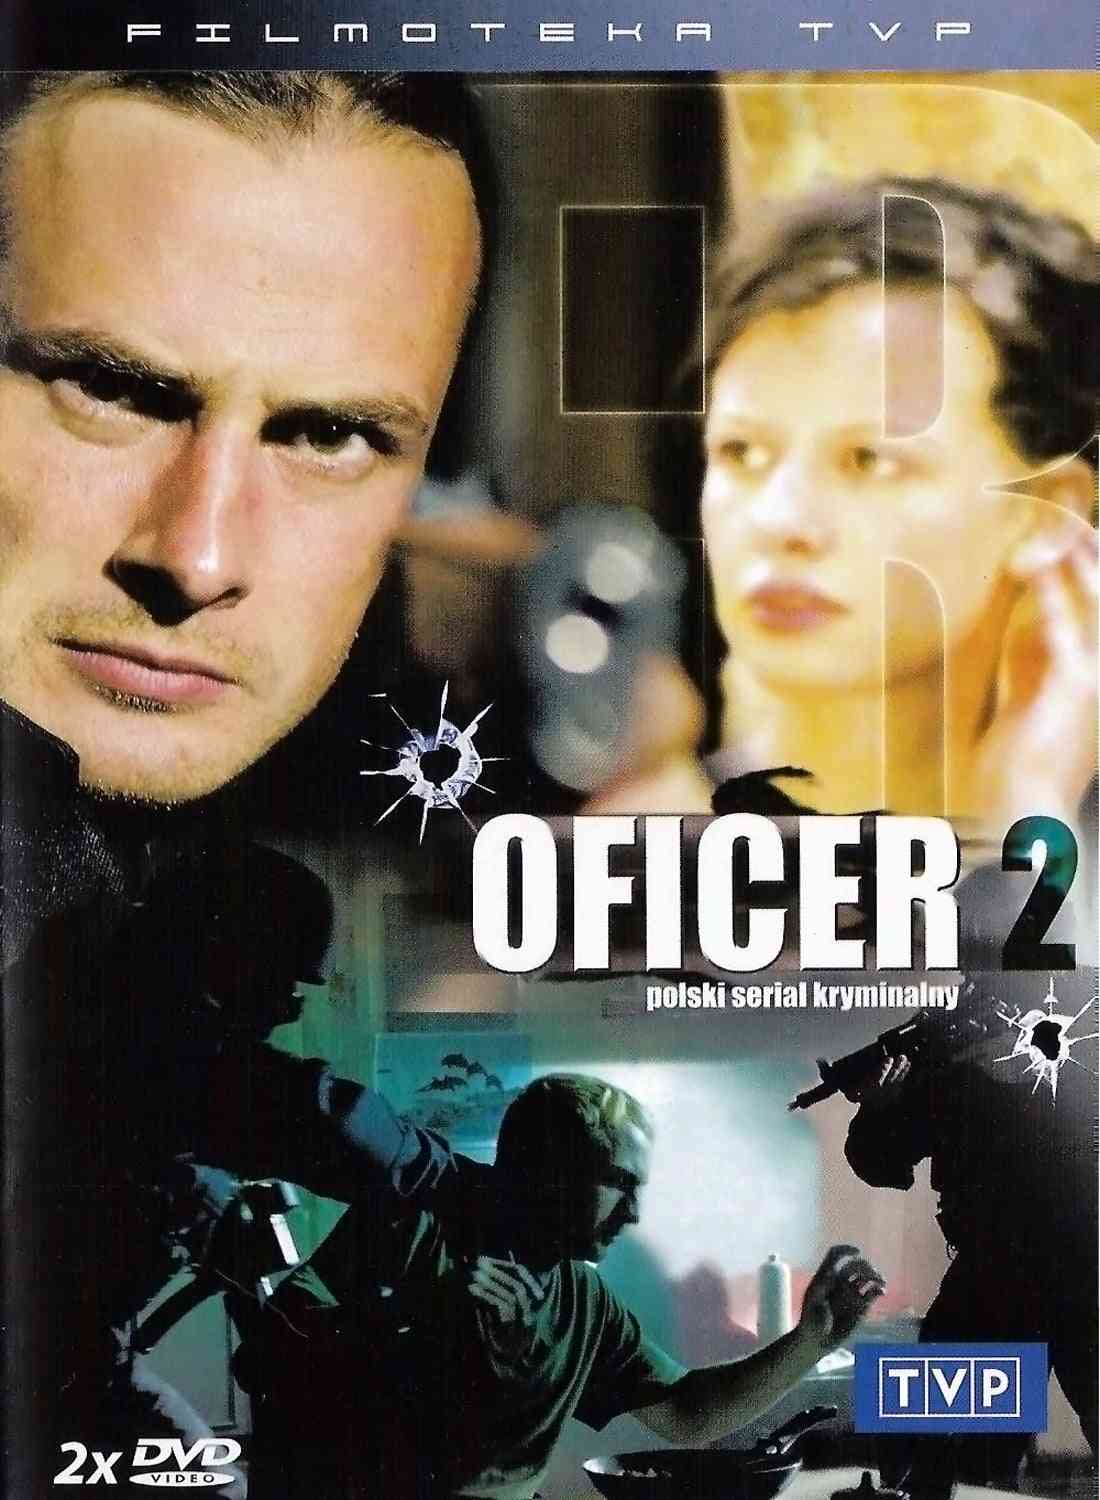 Oficer  (2005),Online za darmo